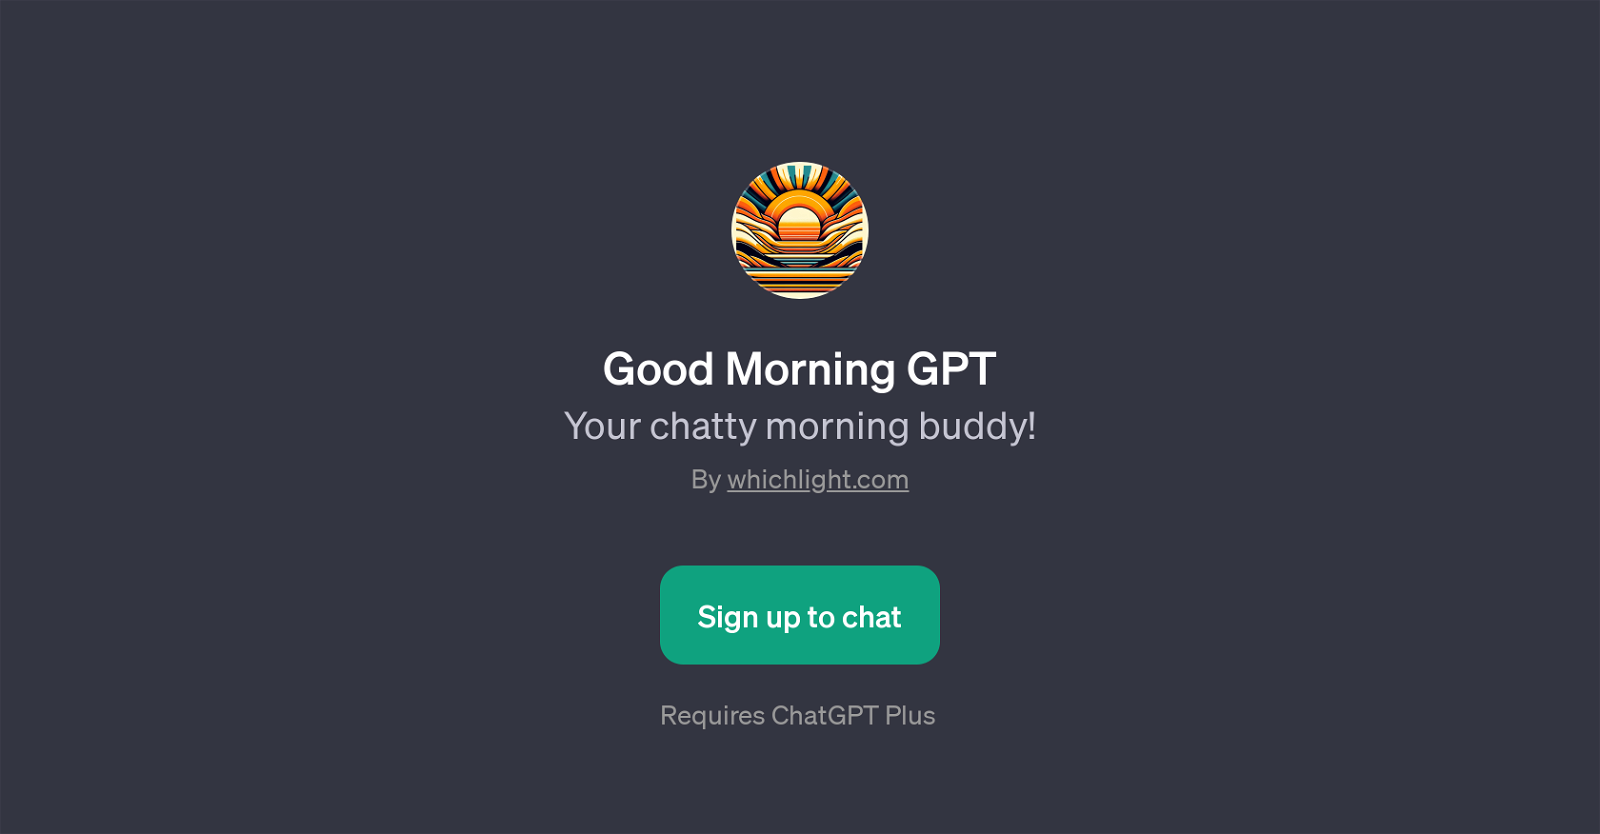 Good Morning GPT website